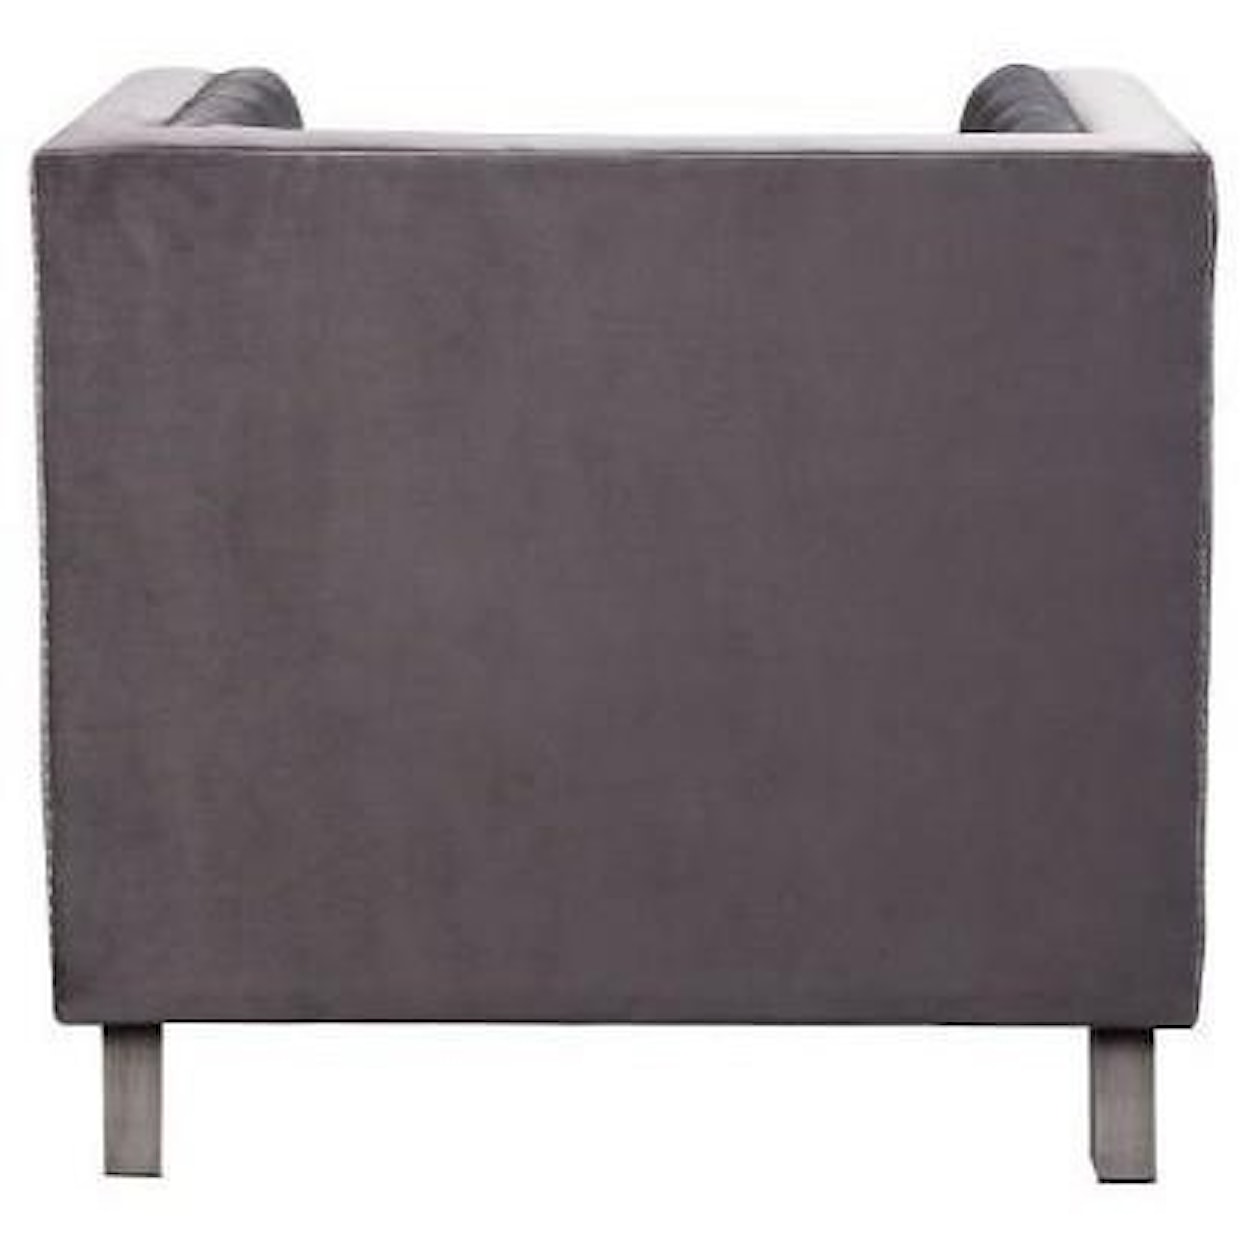 Acme Furniture Hegio Chair w/1 Pillow